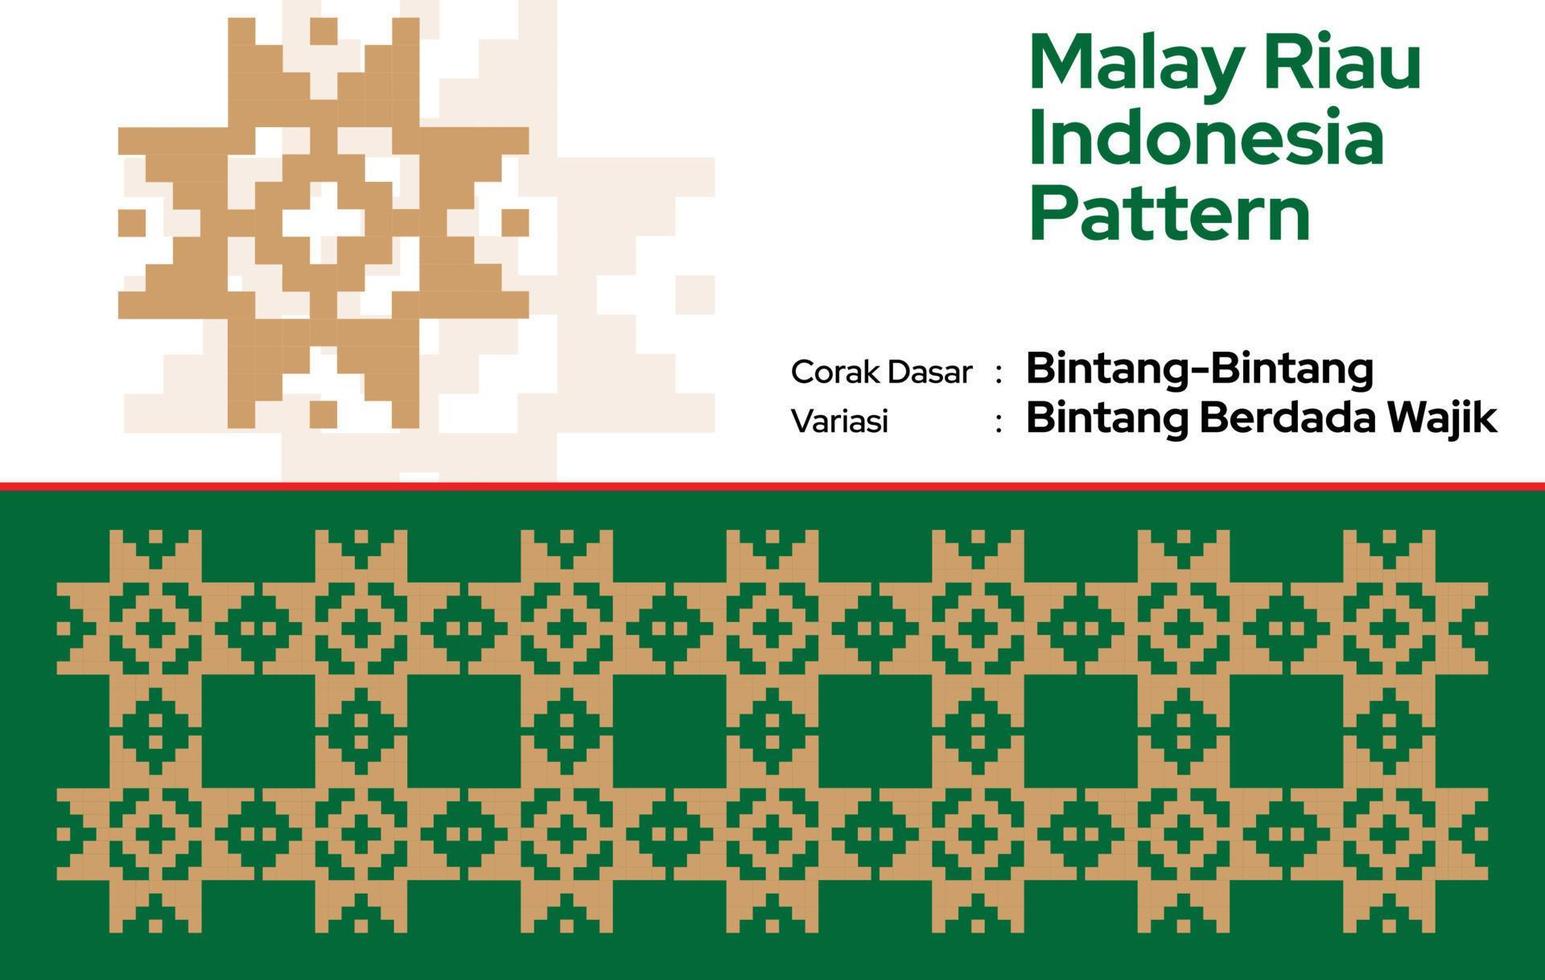 modelo malayo riau batik Songket tenun, Costura motivo corcho dan ragi bintang bertanda wajik melayu vector